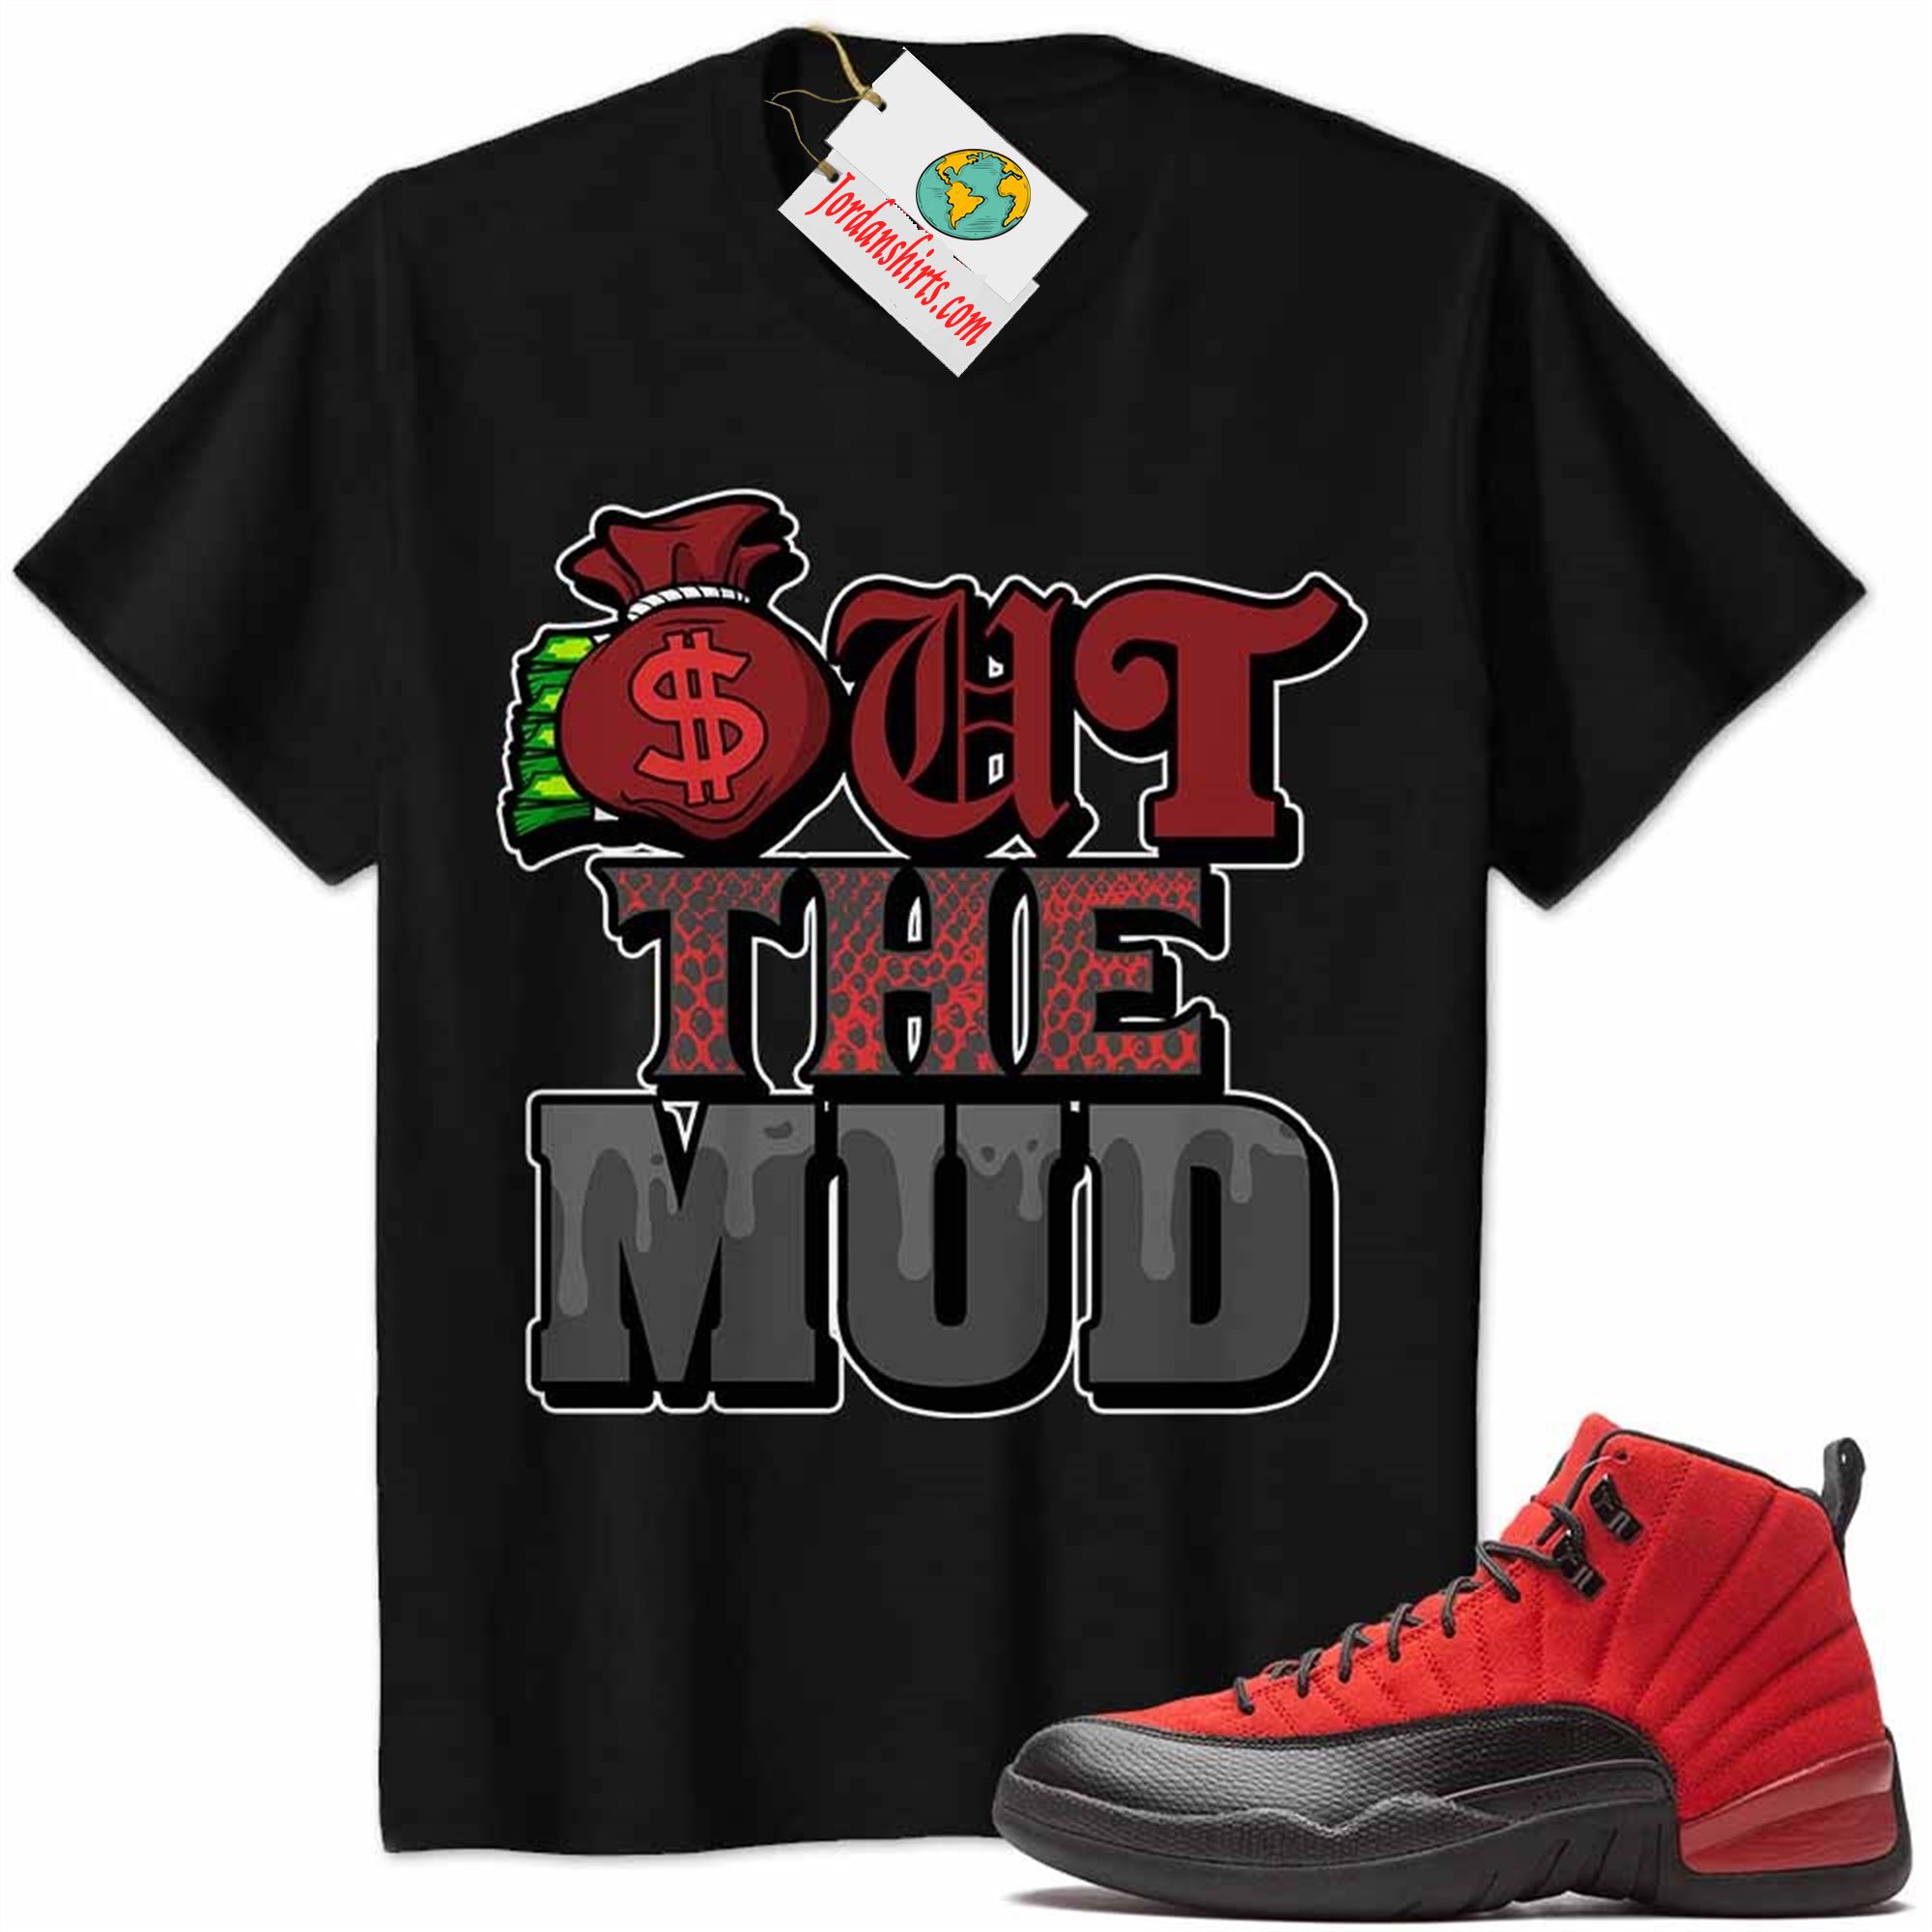 Jordan 12 Shirt, Jordan 12 Reverse Flu Game Shirt Out The Mud Money Bag Black Full Size Up To 5xl